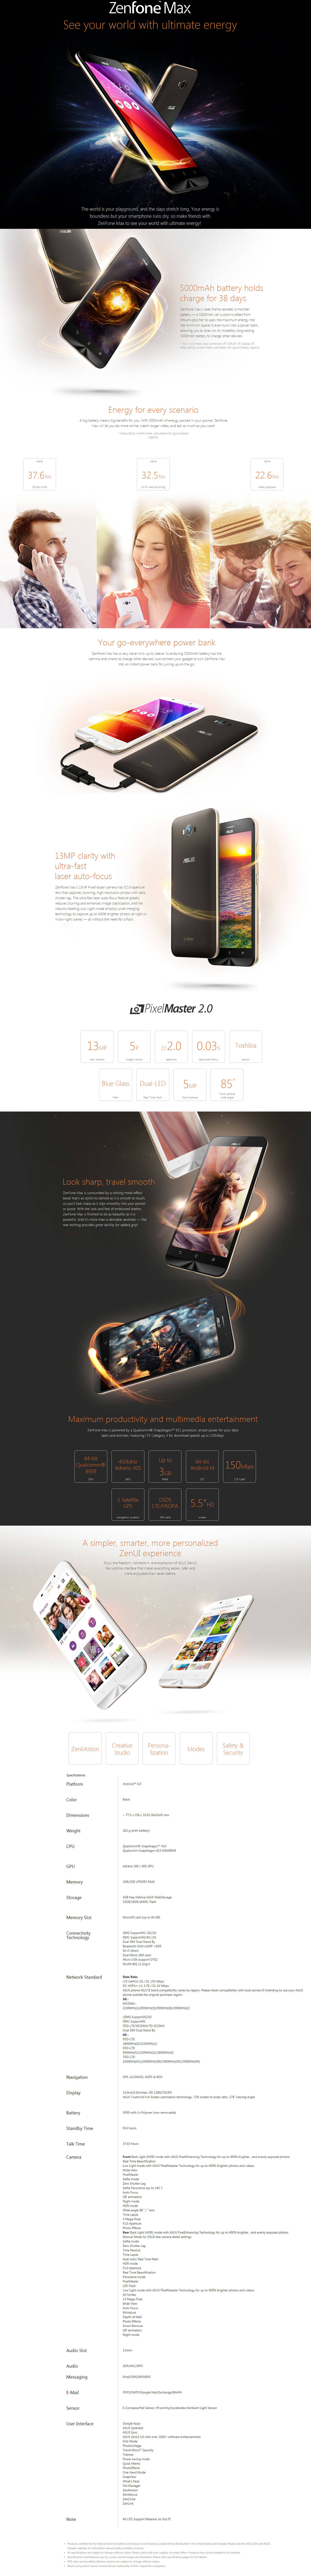  Buy Online Asus ZenFone Max - ZC550KL - Black (2GB, 16GB, 5.5inch)